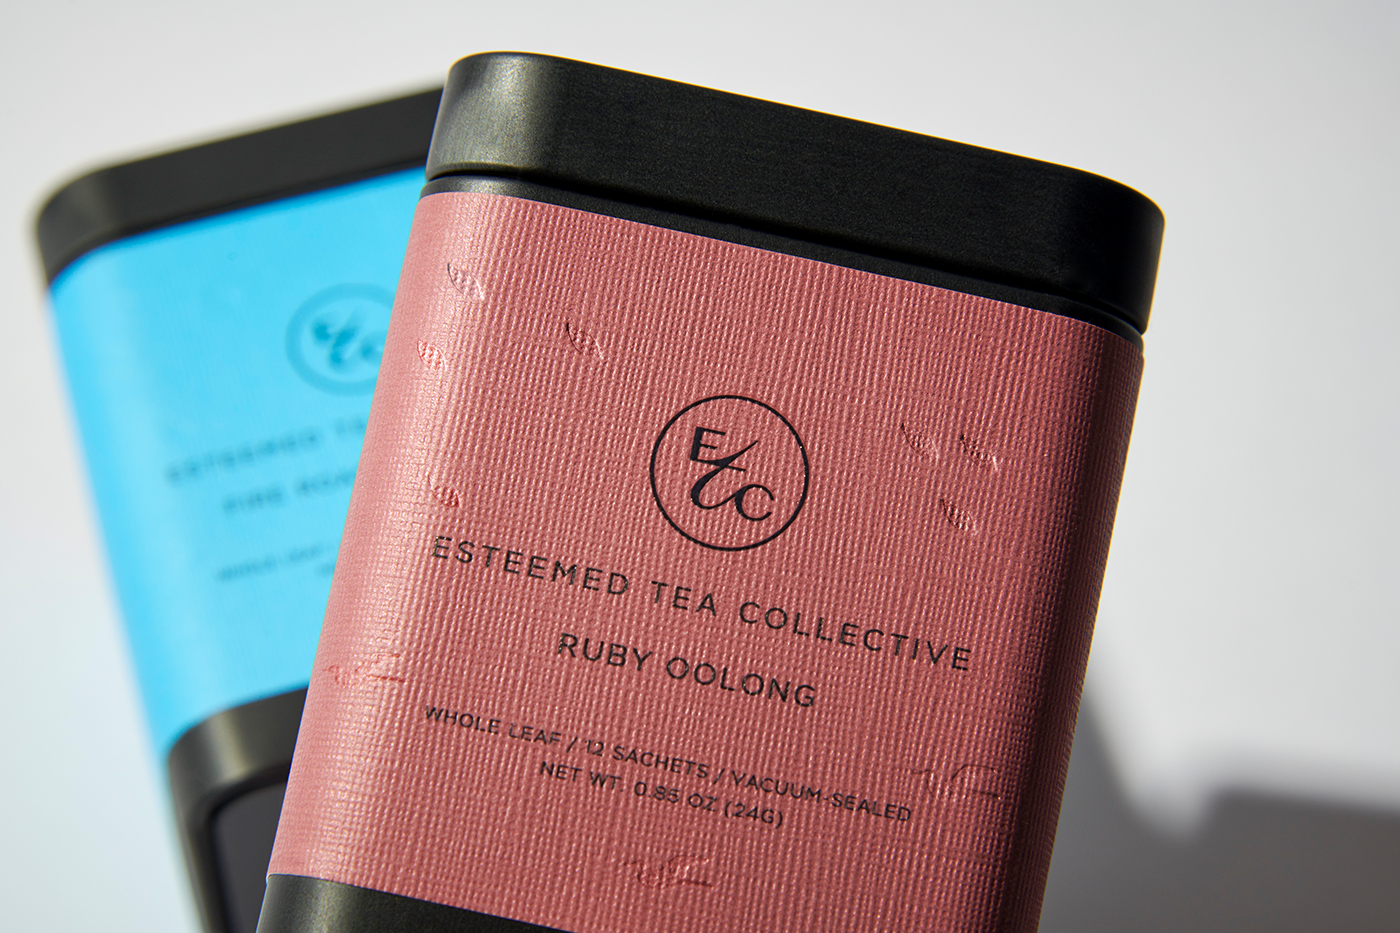 anagramastudio etc esteemedteacollective Packaging patterndesign design tea teaproduction teapackaging teabox